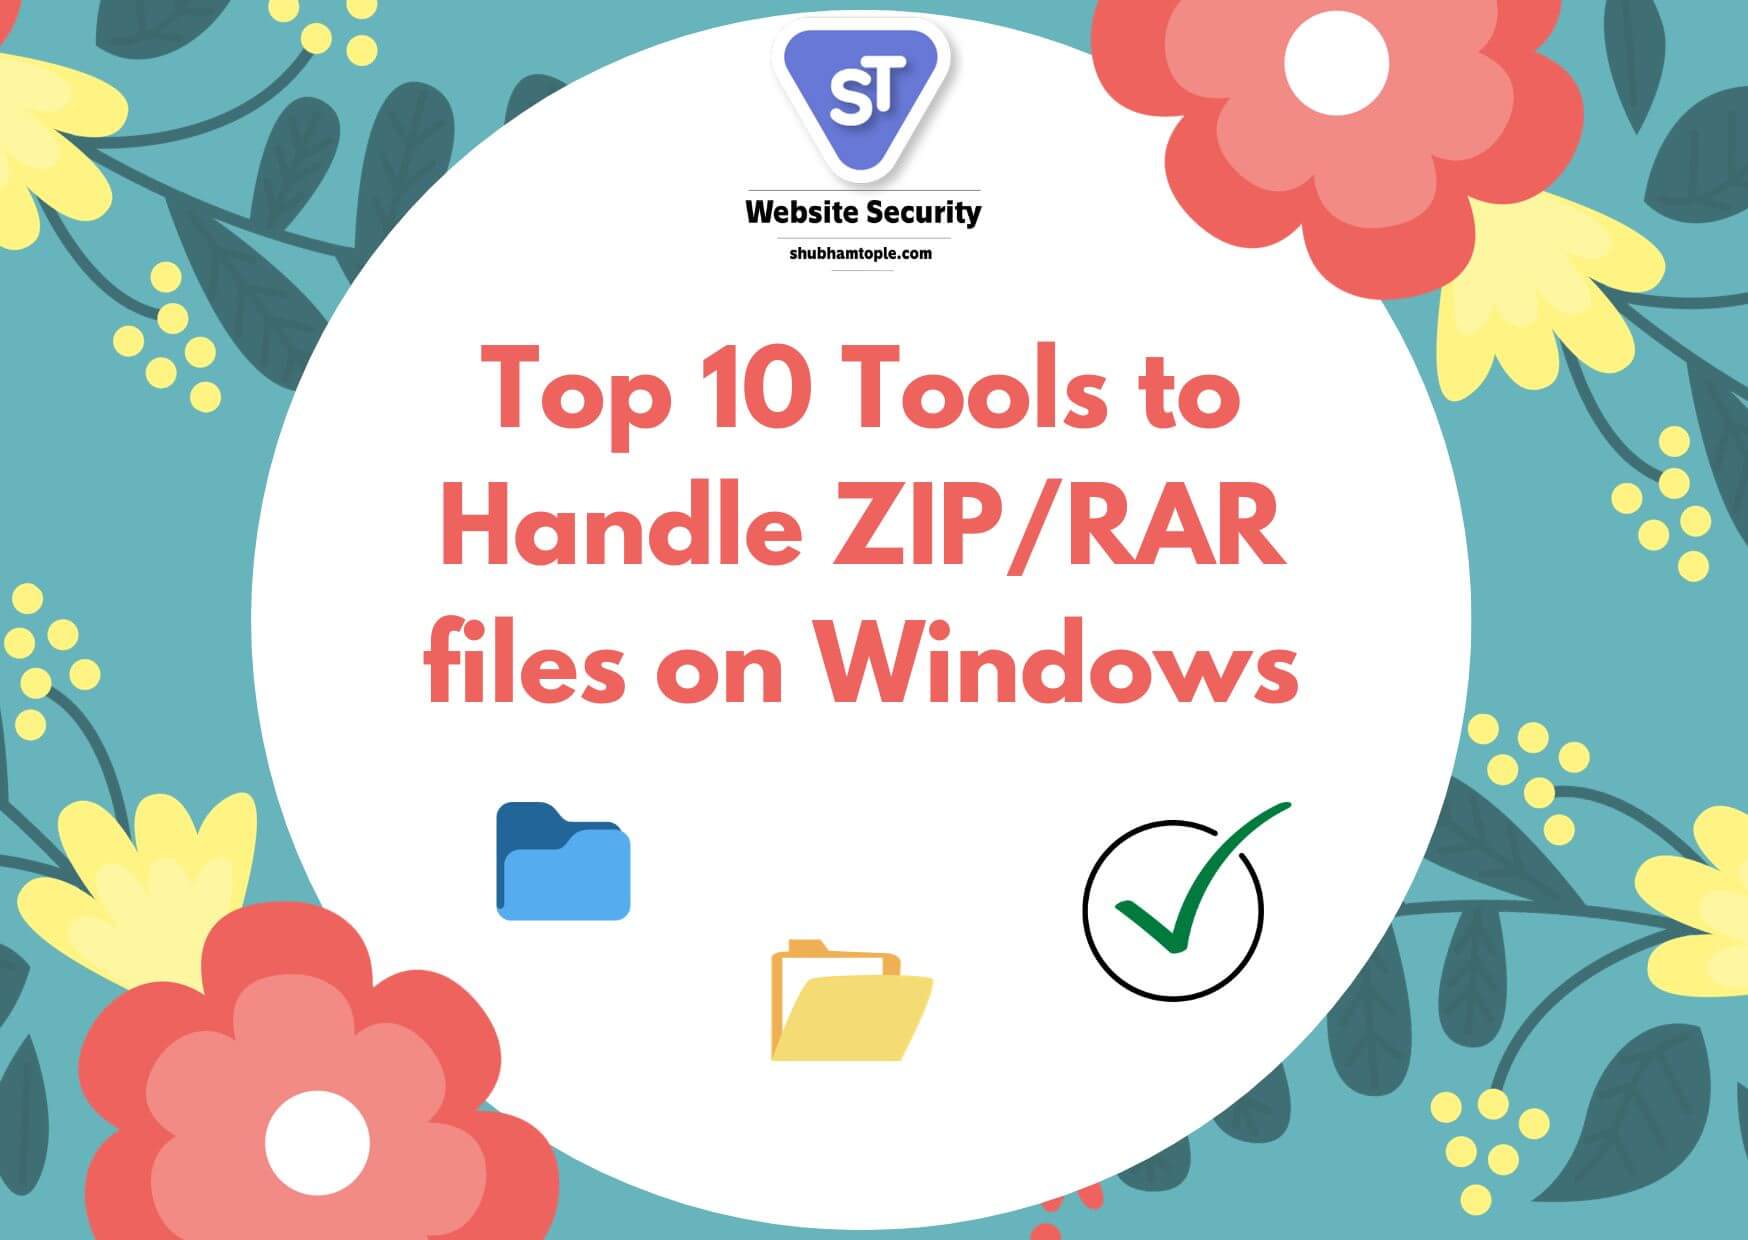 Tools to Handle ZIP/RAR files on Windows